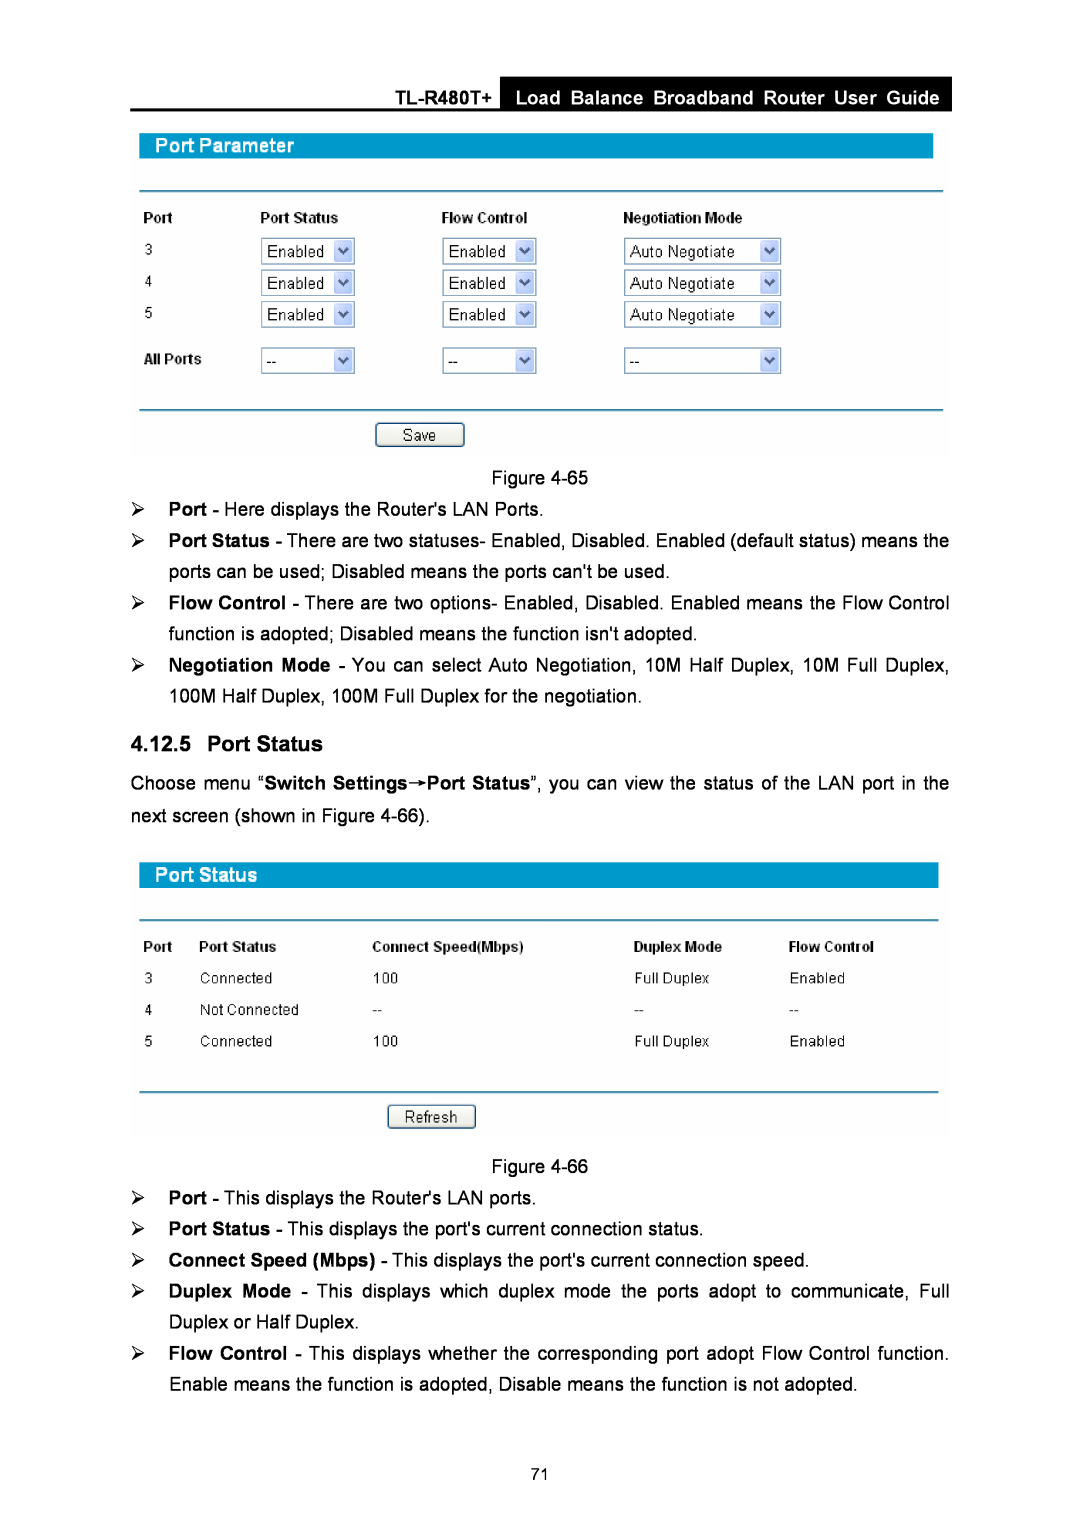 TP-Link TL-R480T+ manual Port Status, Load Balance Broadband Router User Guide 